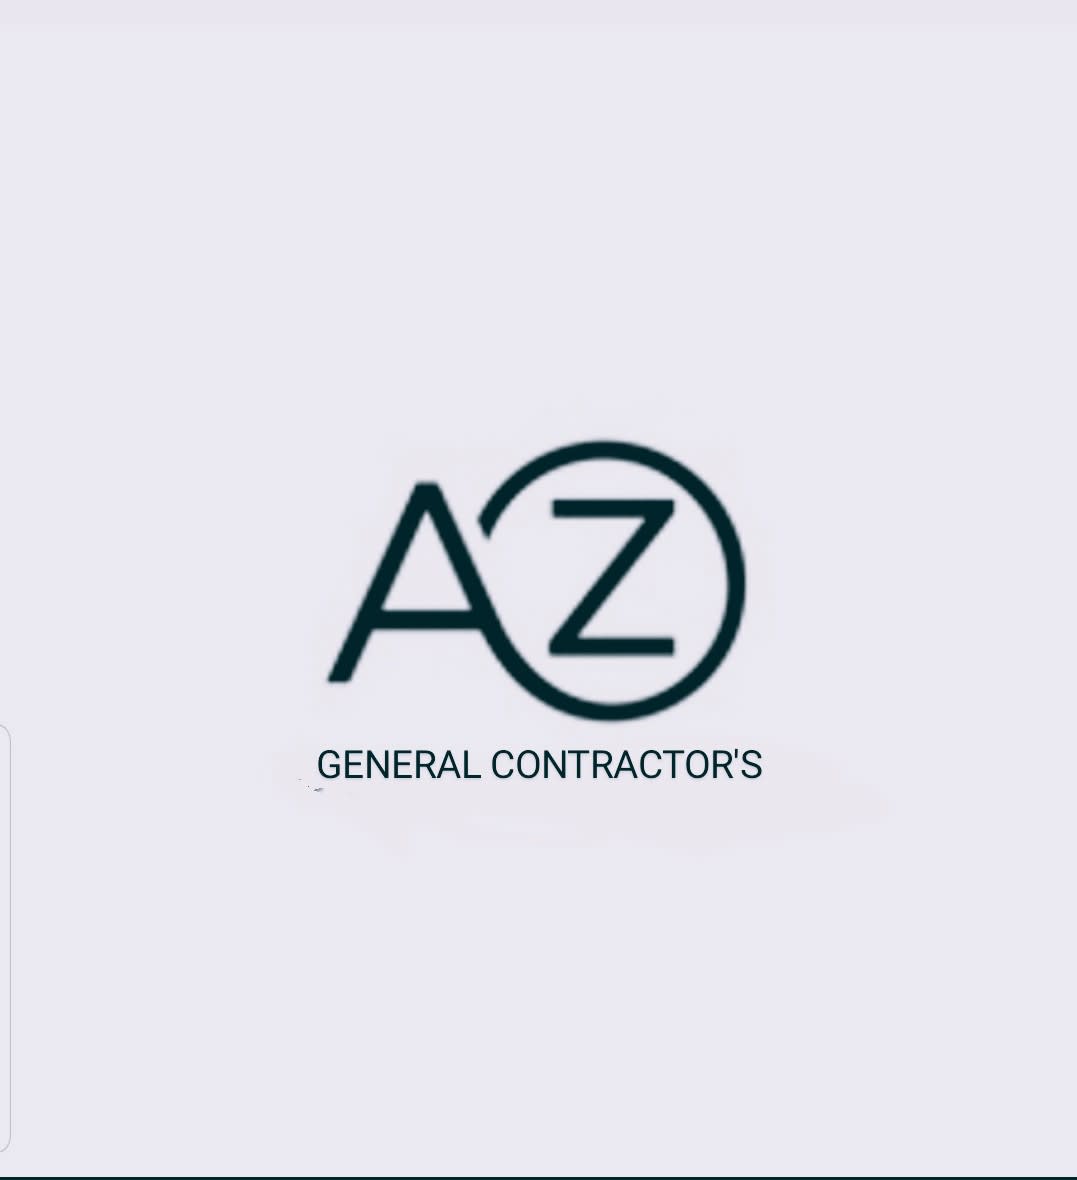 Az General Contractor's